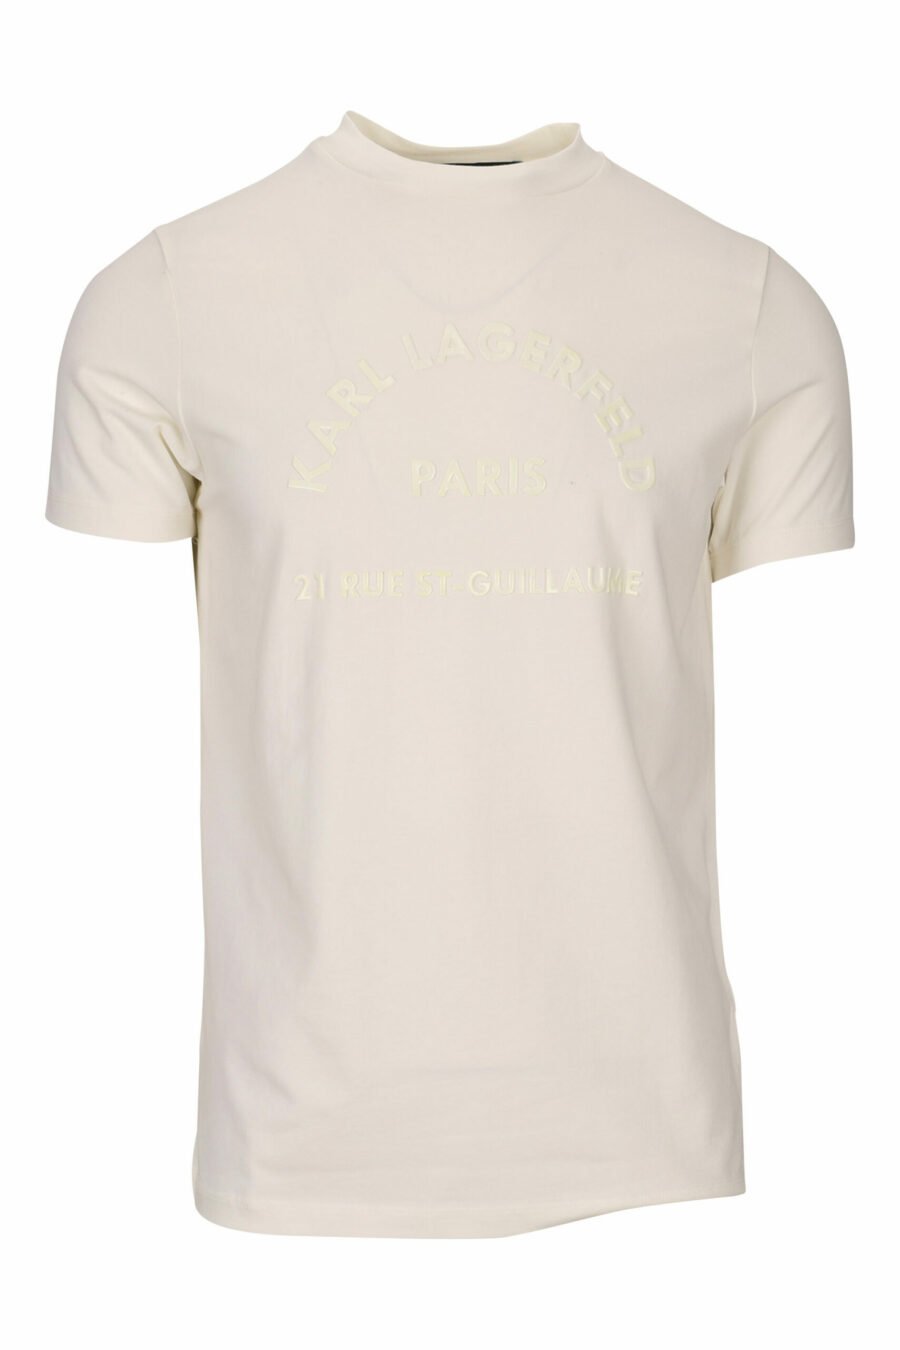 T-shirt blanc avec maxilogo monochrome "rue st guillaume" - 4062226678124 scaled